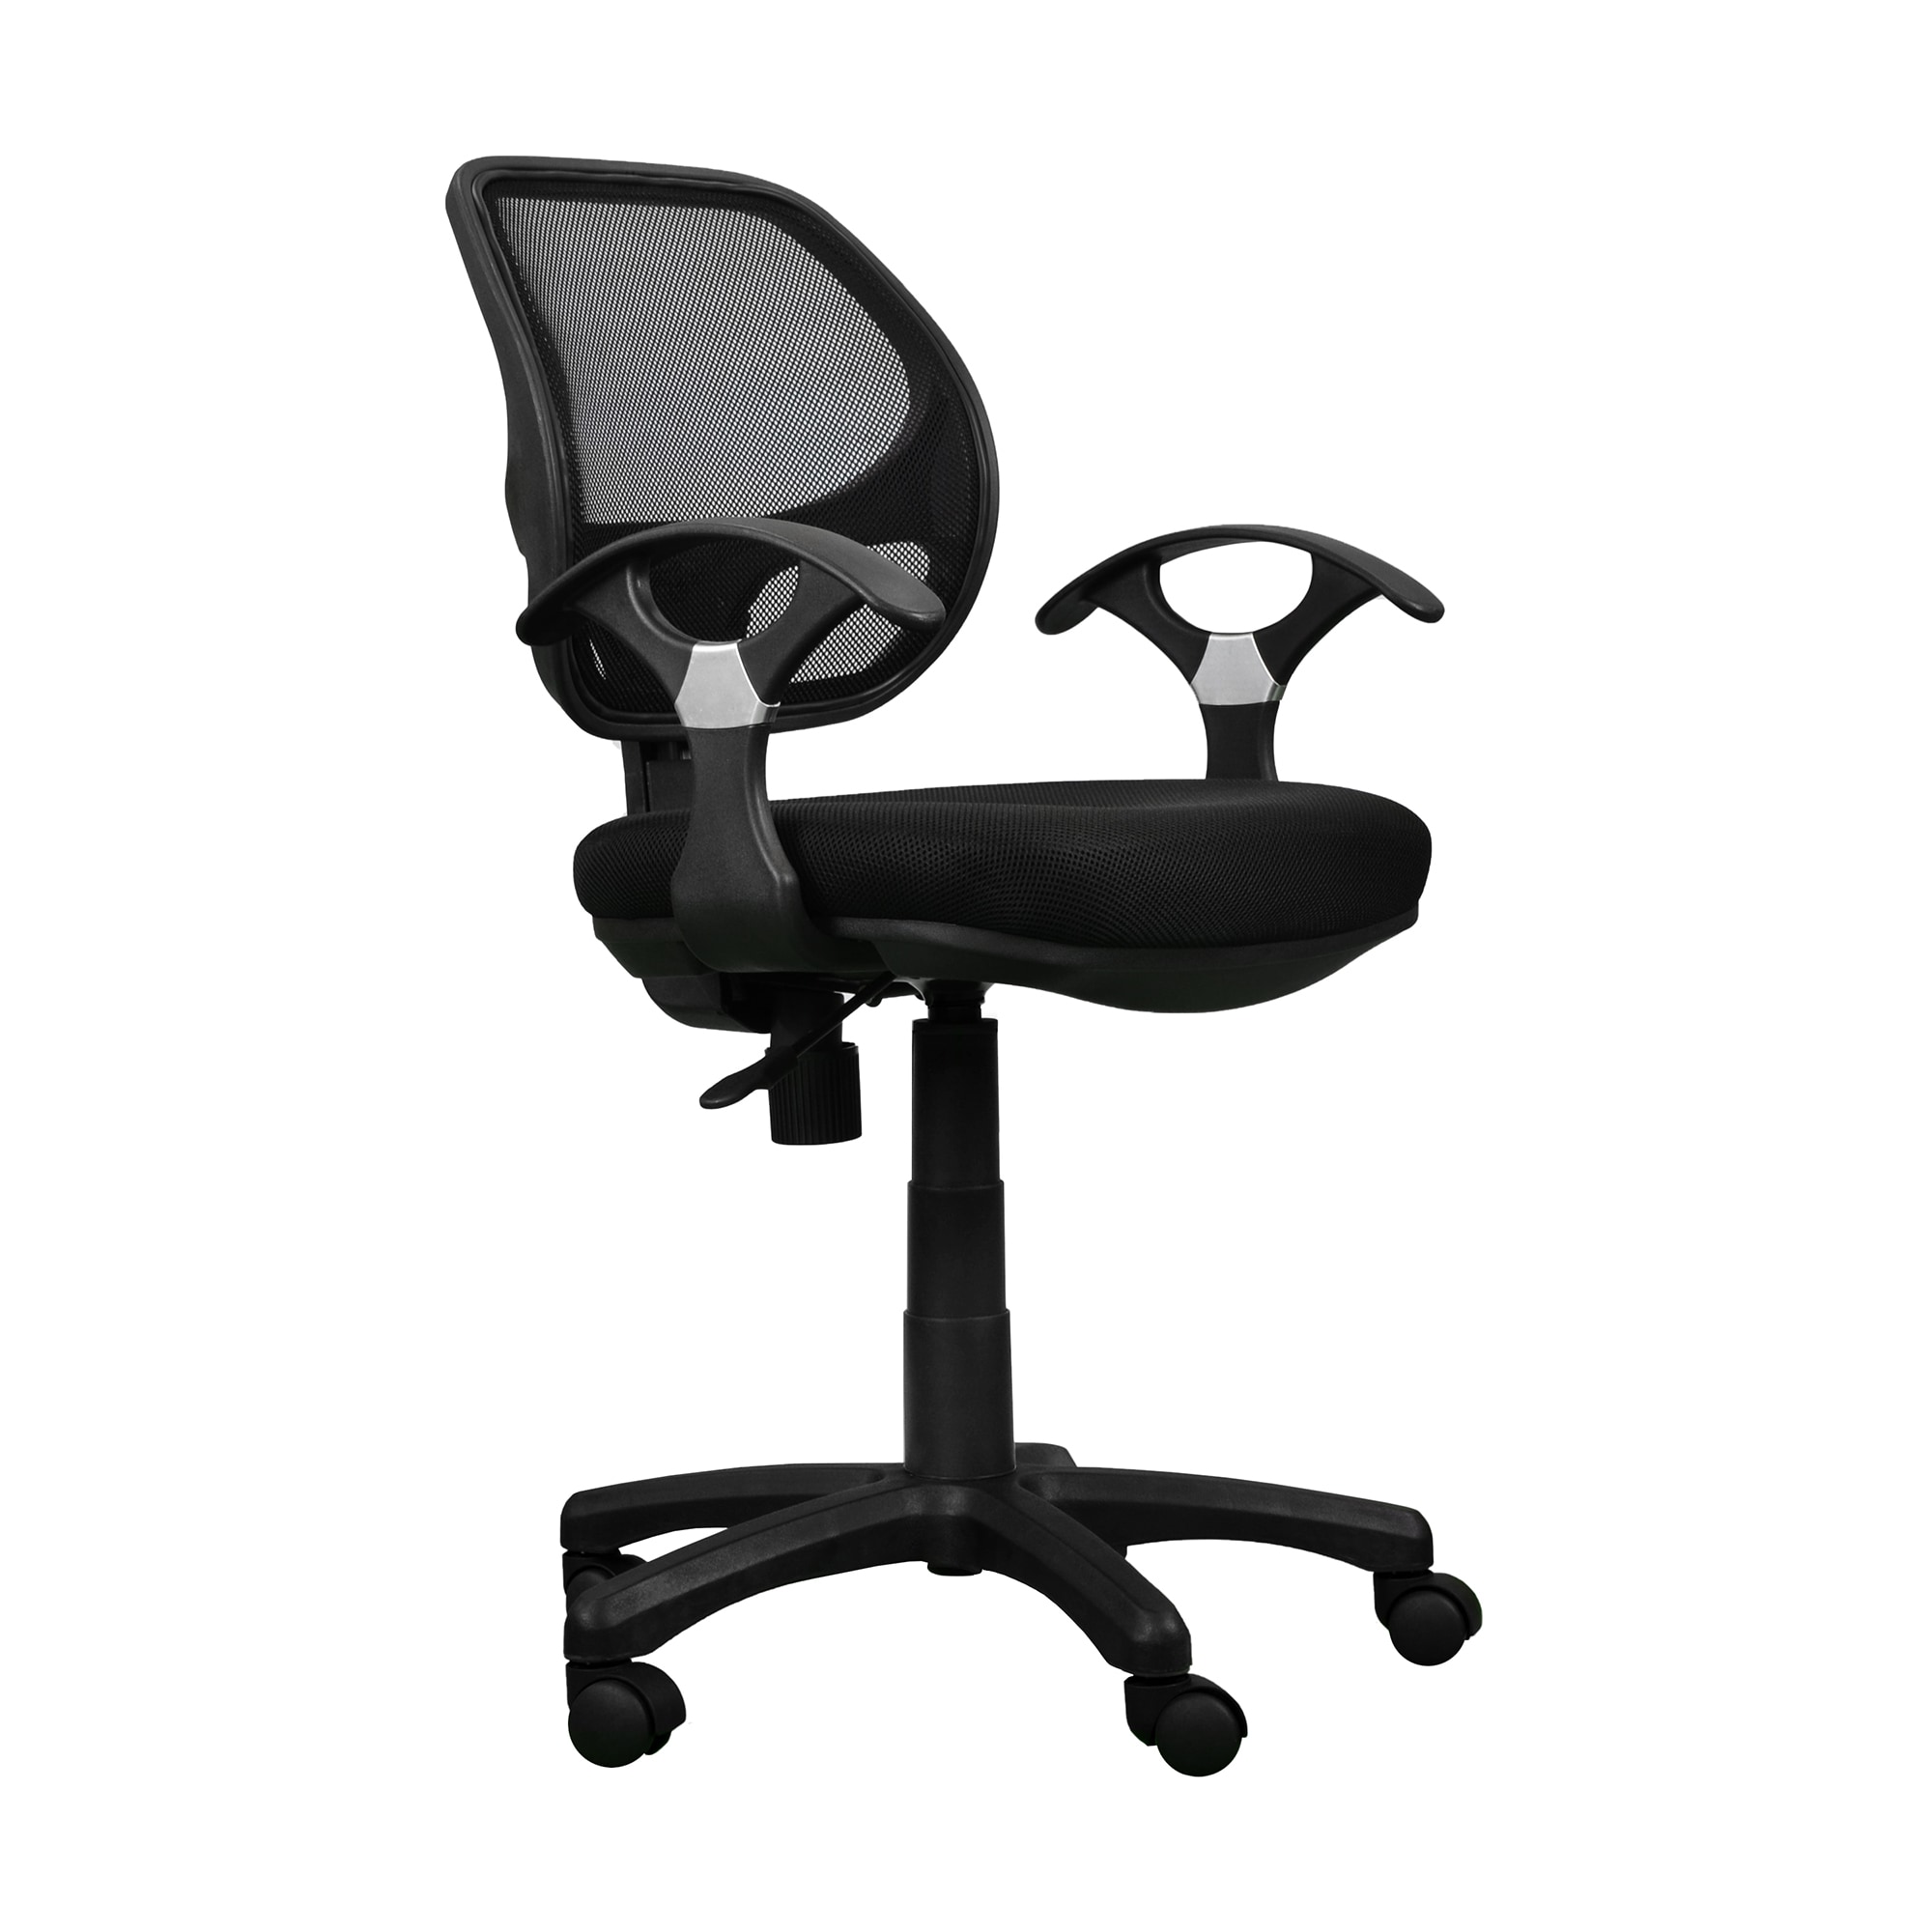 CASAINC Office chair Black Contemporary Ergonomic Adjustable Height ...